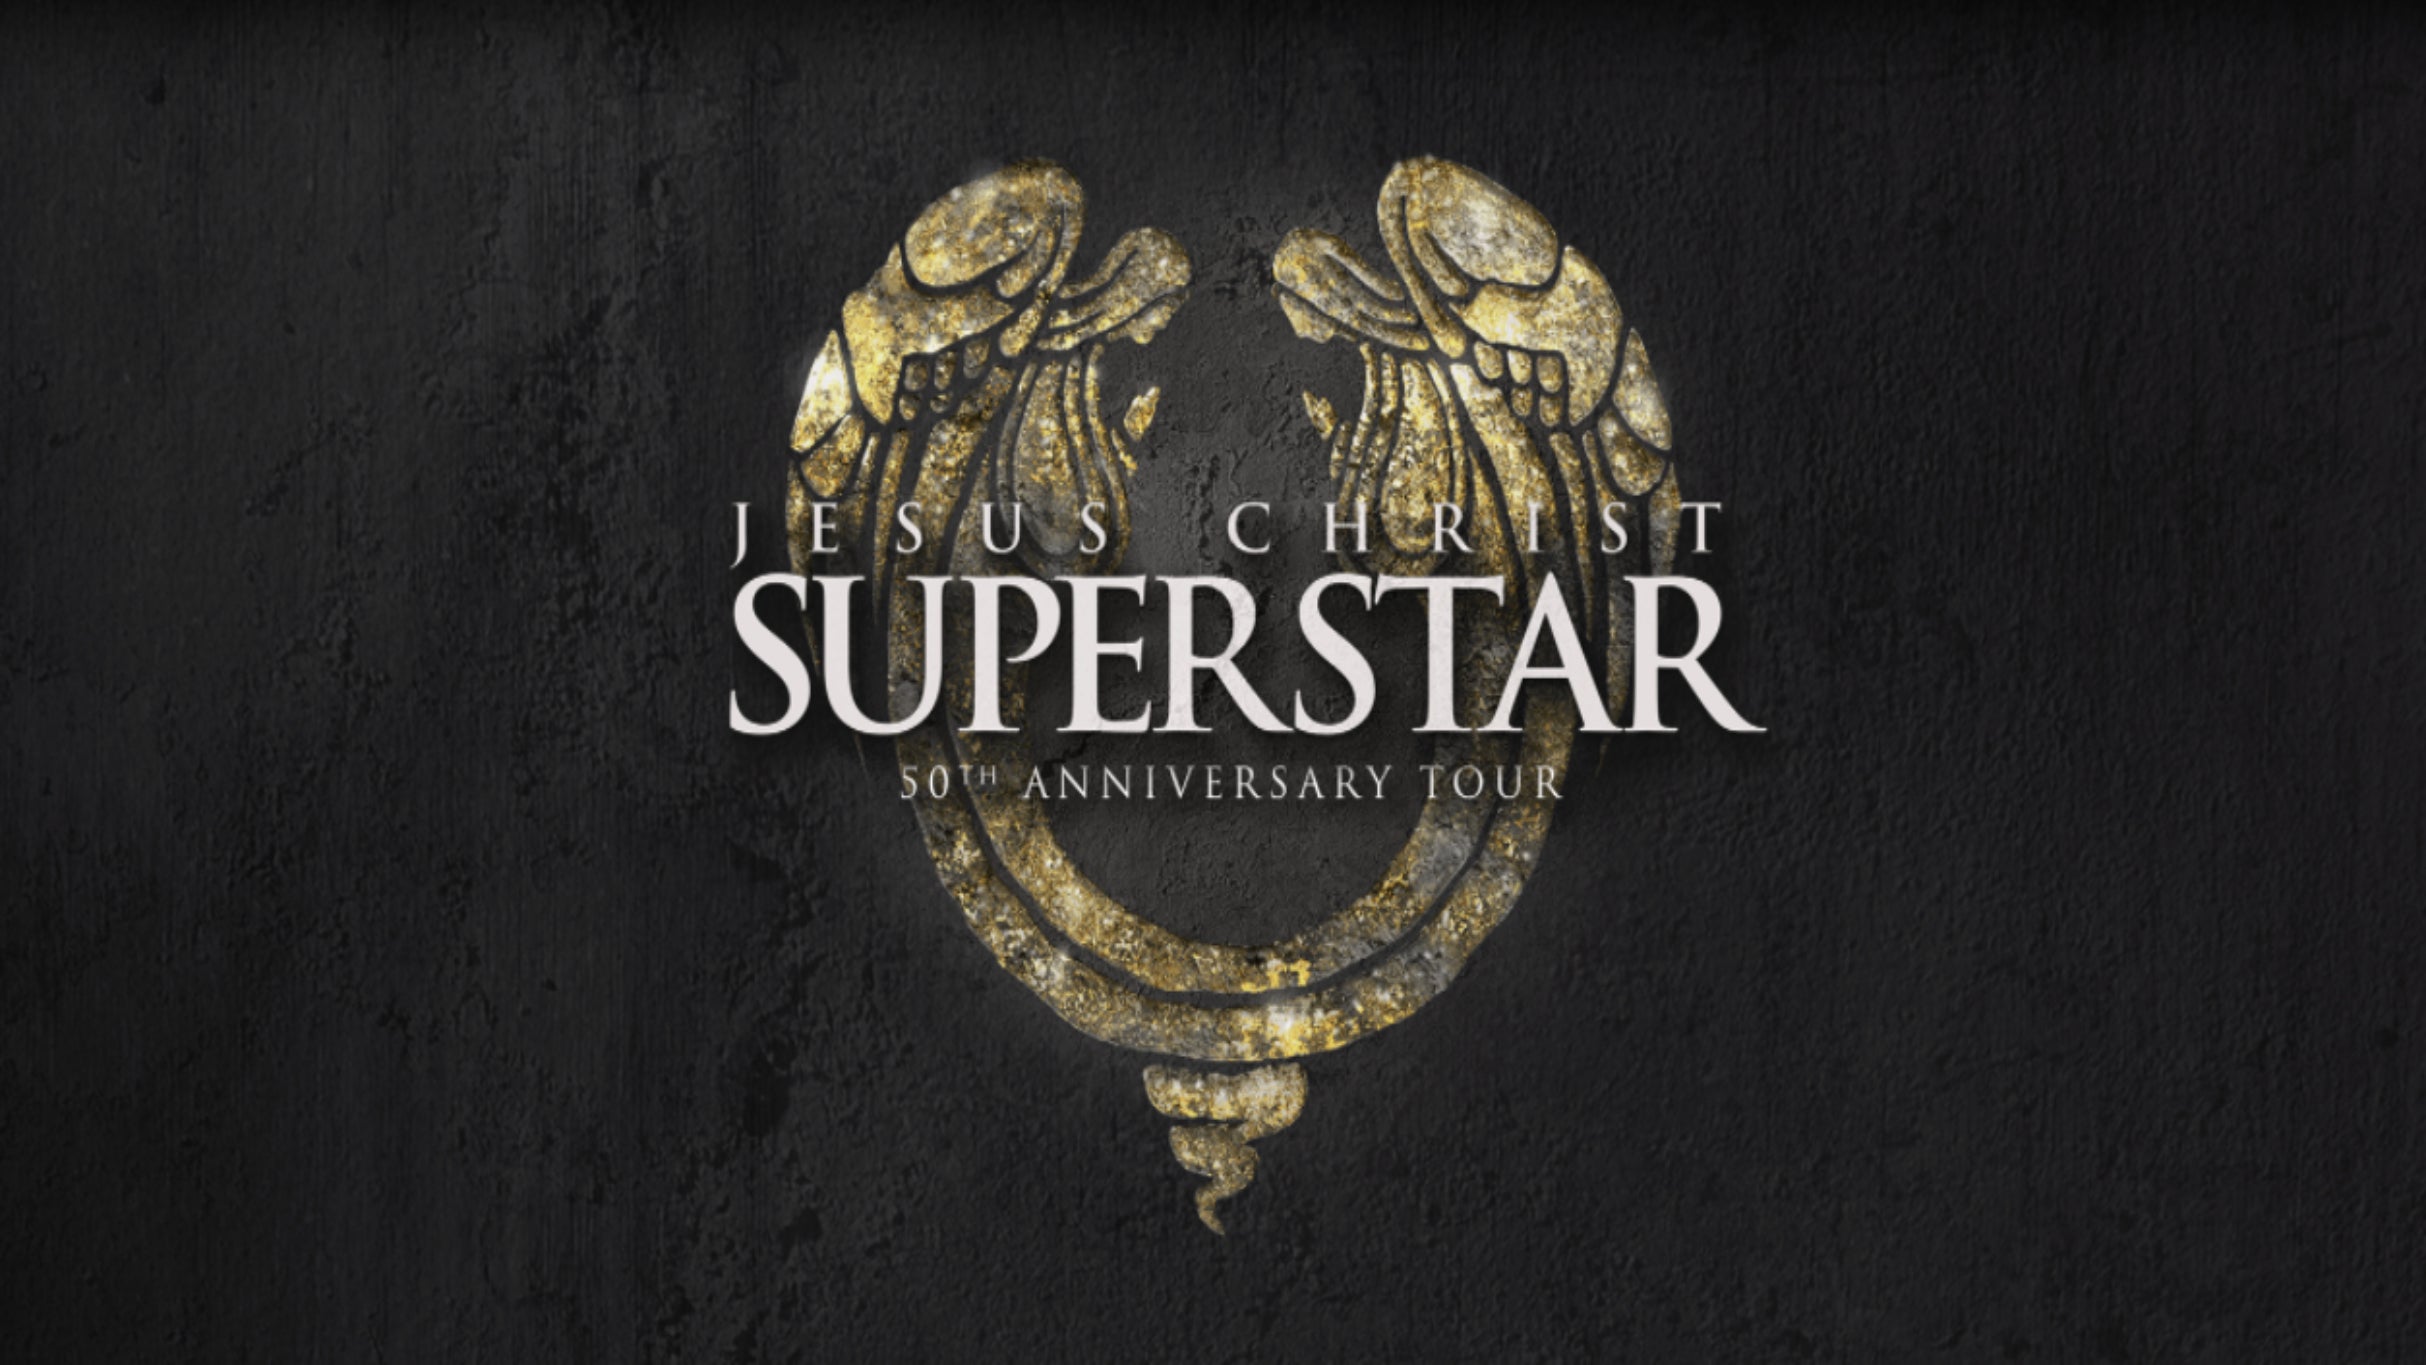 Jesus Christ Superstar (Touring) in Washington promo photo for Batn App presale offer code